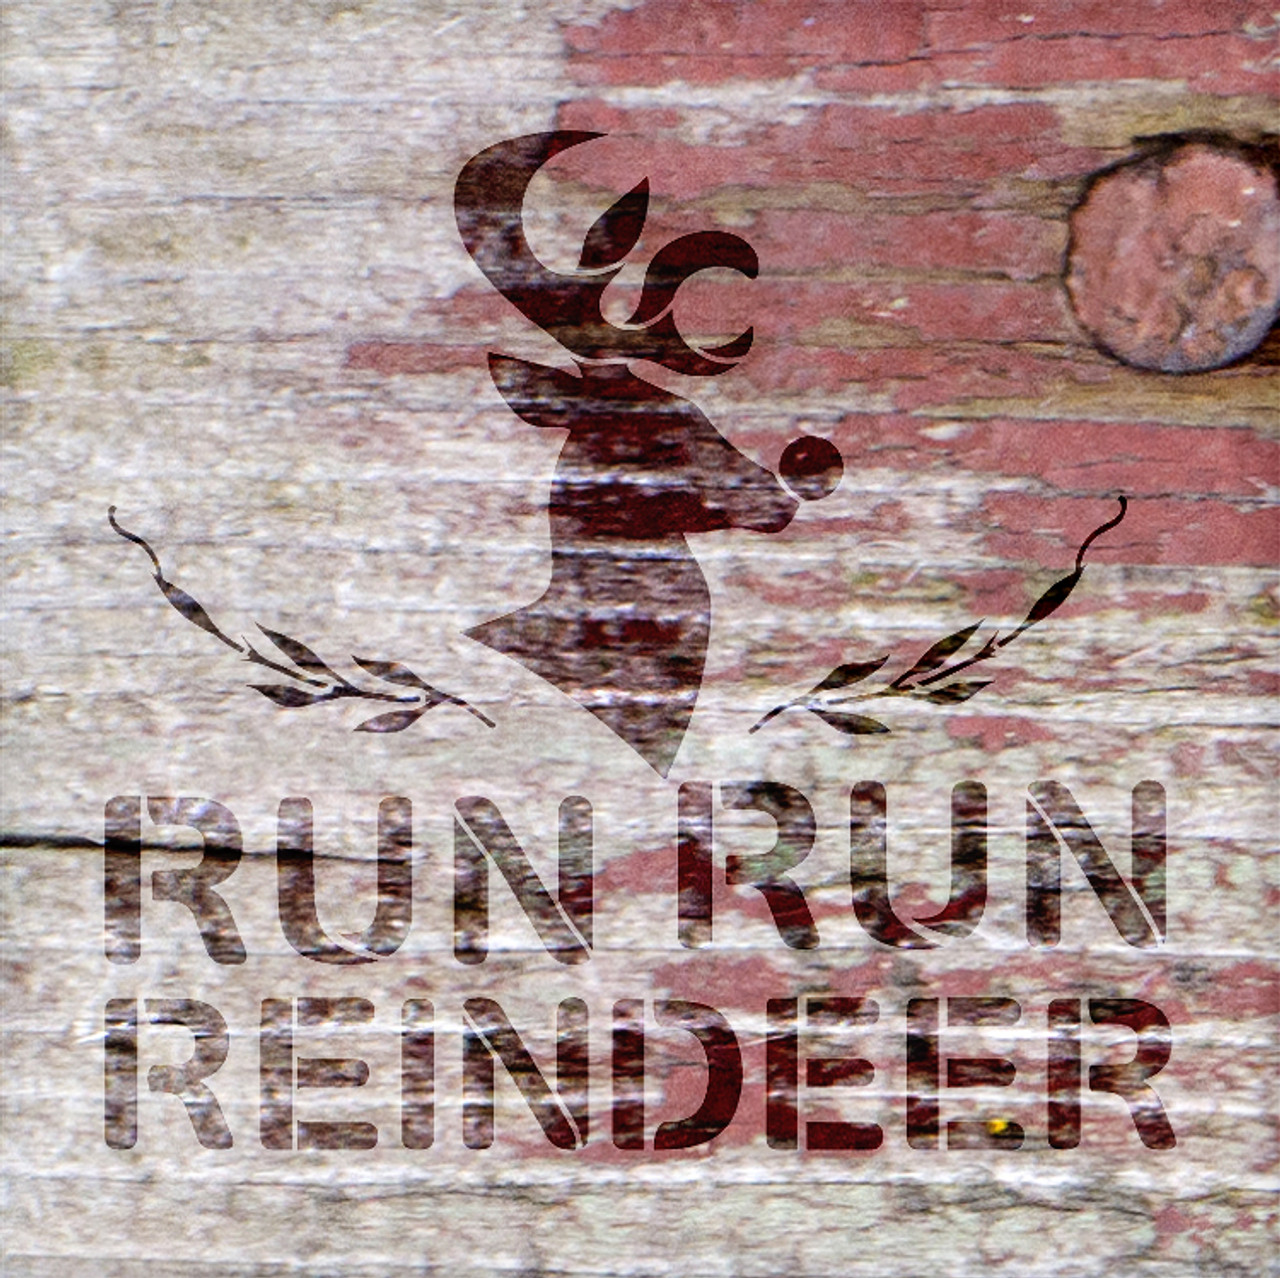 Run Run Reindeer - Word Art Stencil - 11" x 11" - STCL2151_1 - by StudioR12